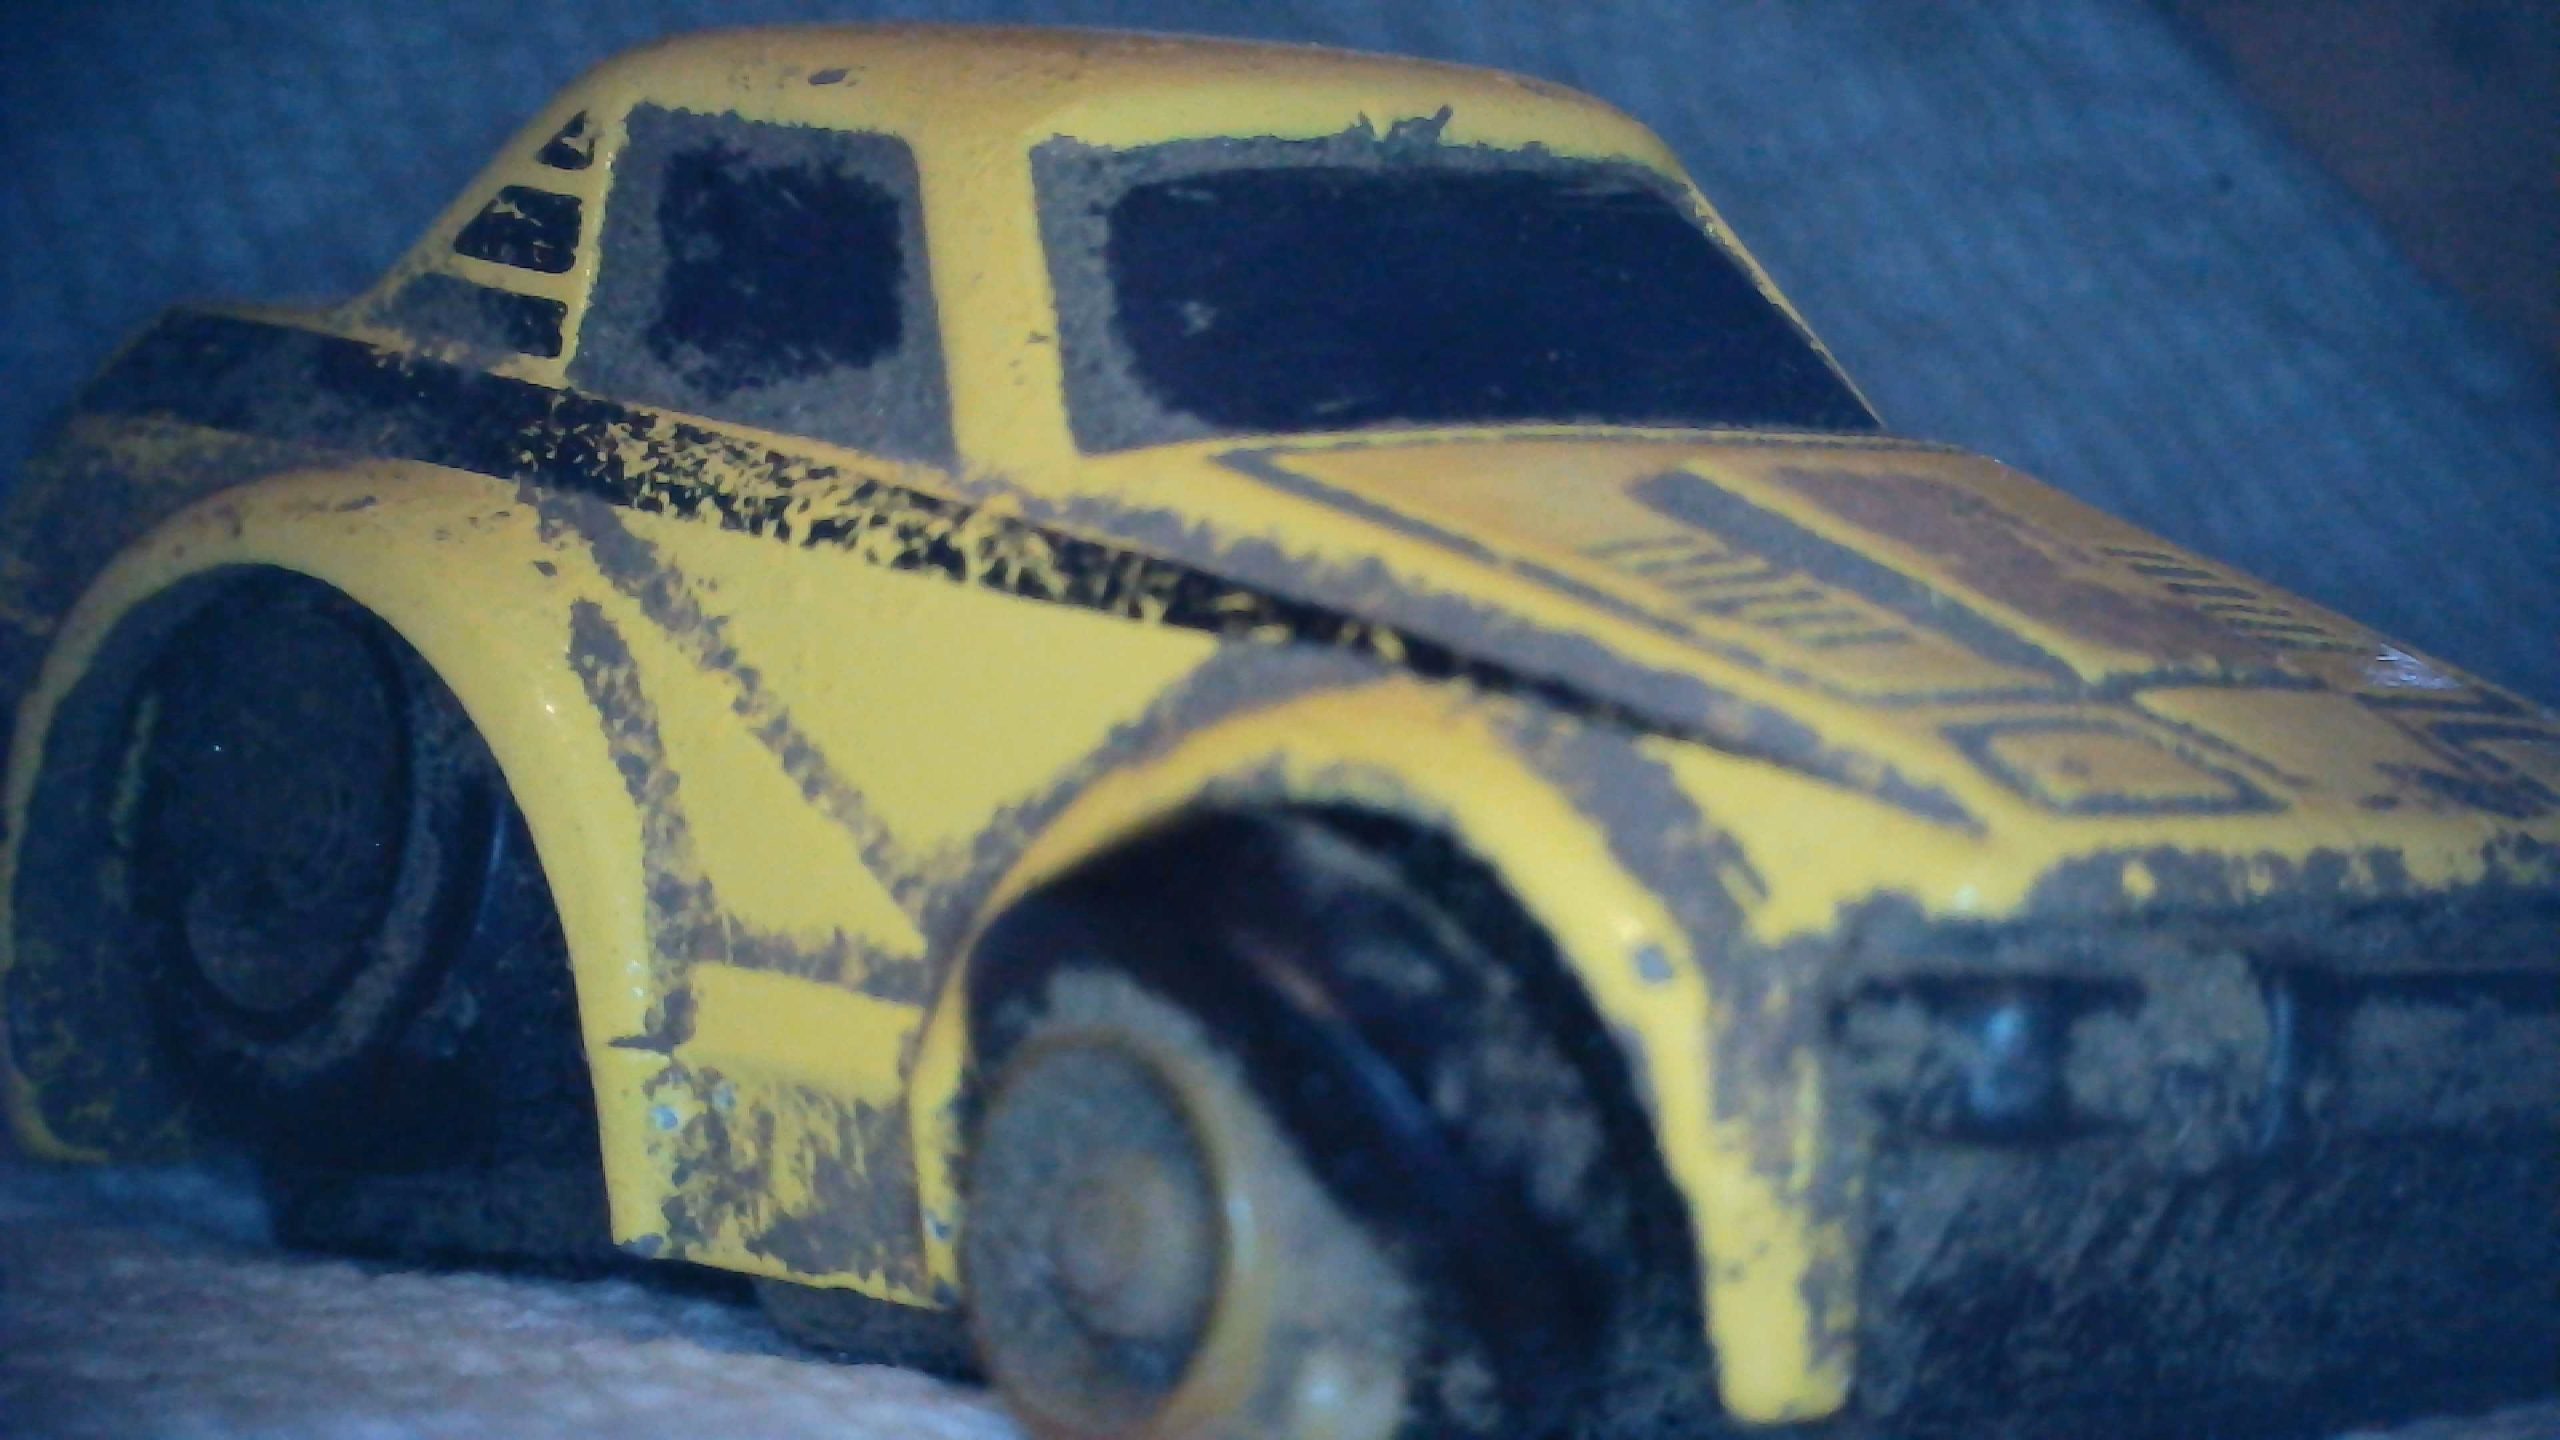 MC Toy Car